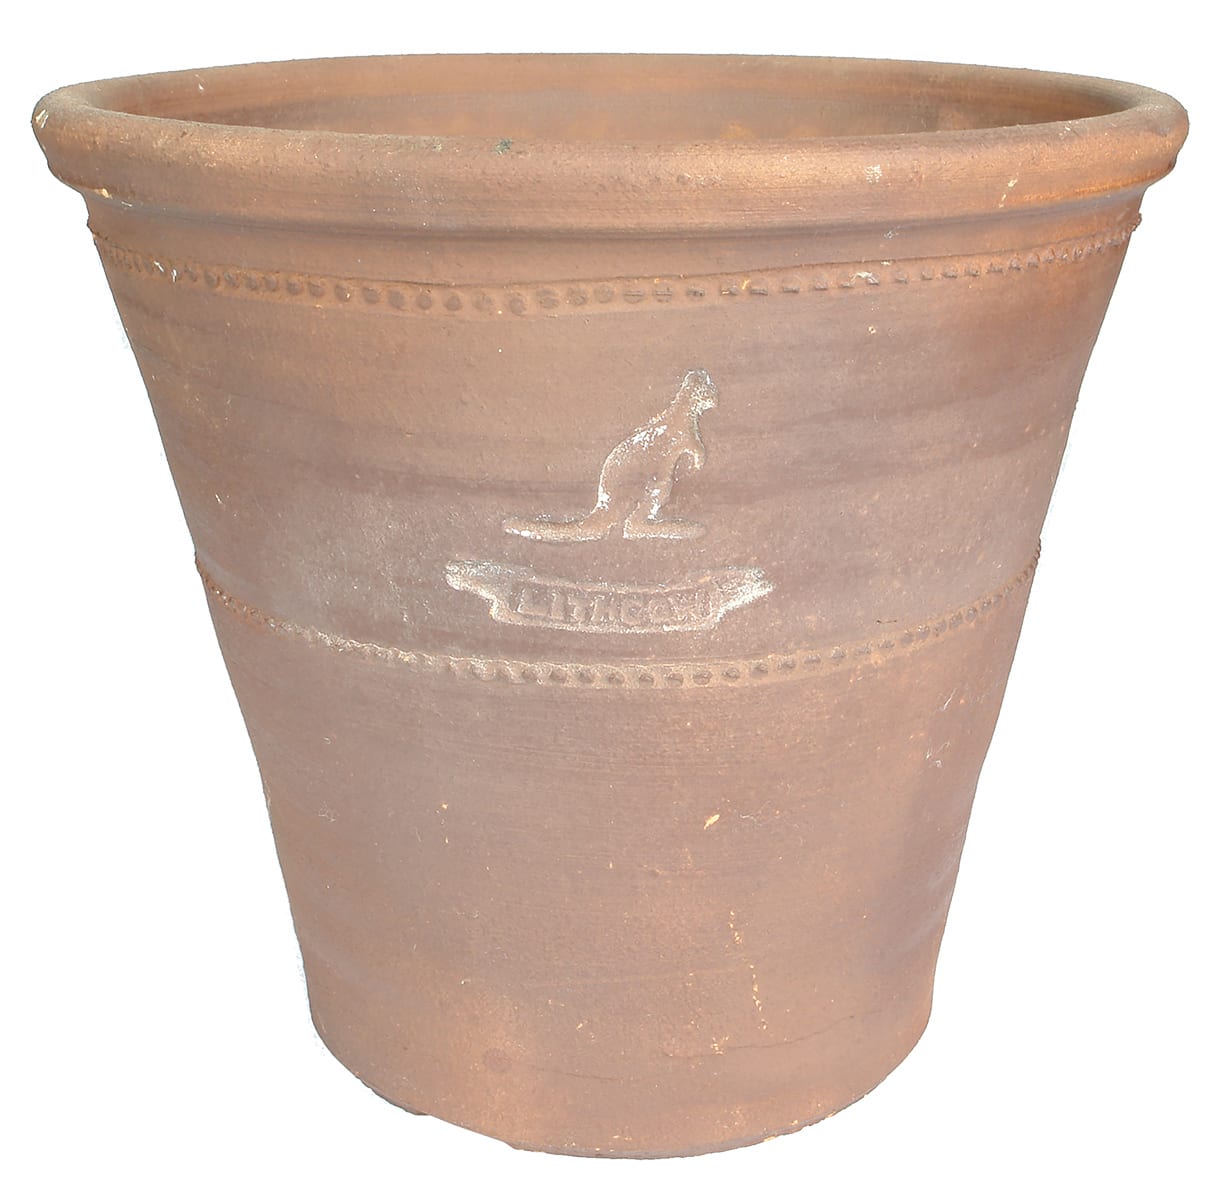 Lithgow Pottery Pot